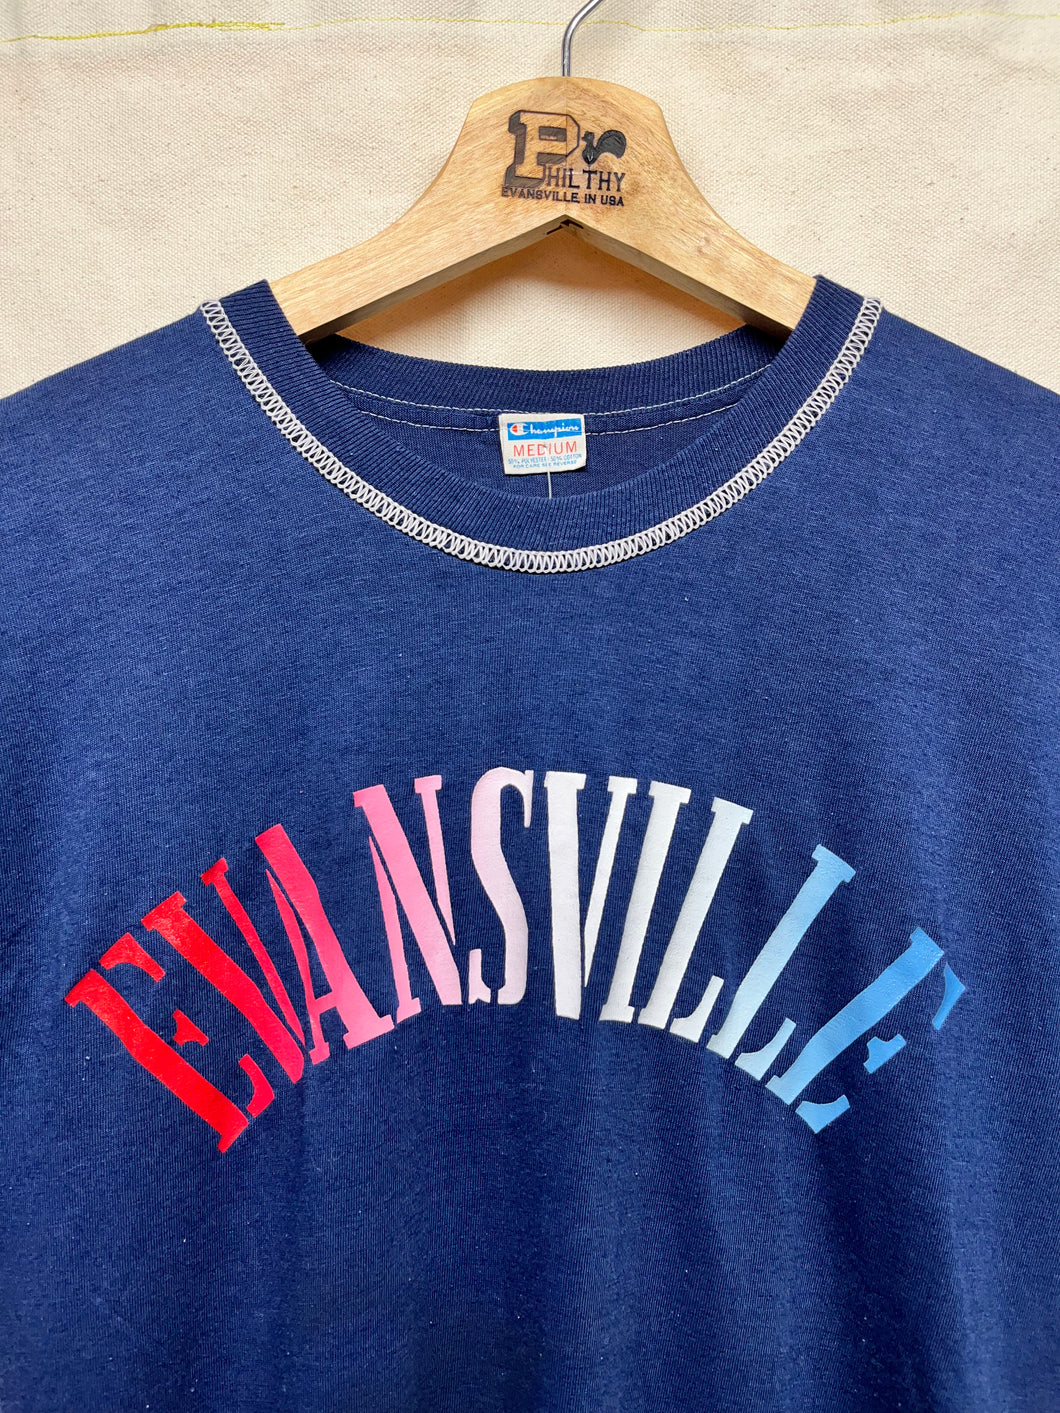 Vintage Evansville Gradient Print Champion Blue Bar T-Shirt: M